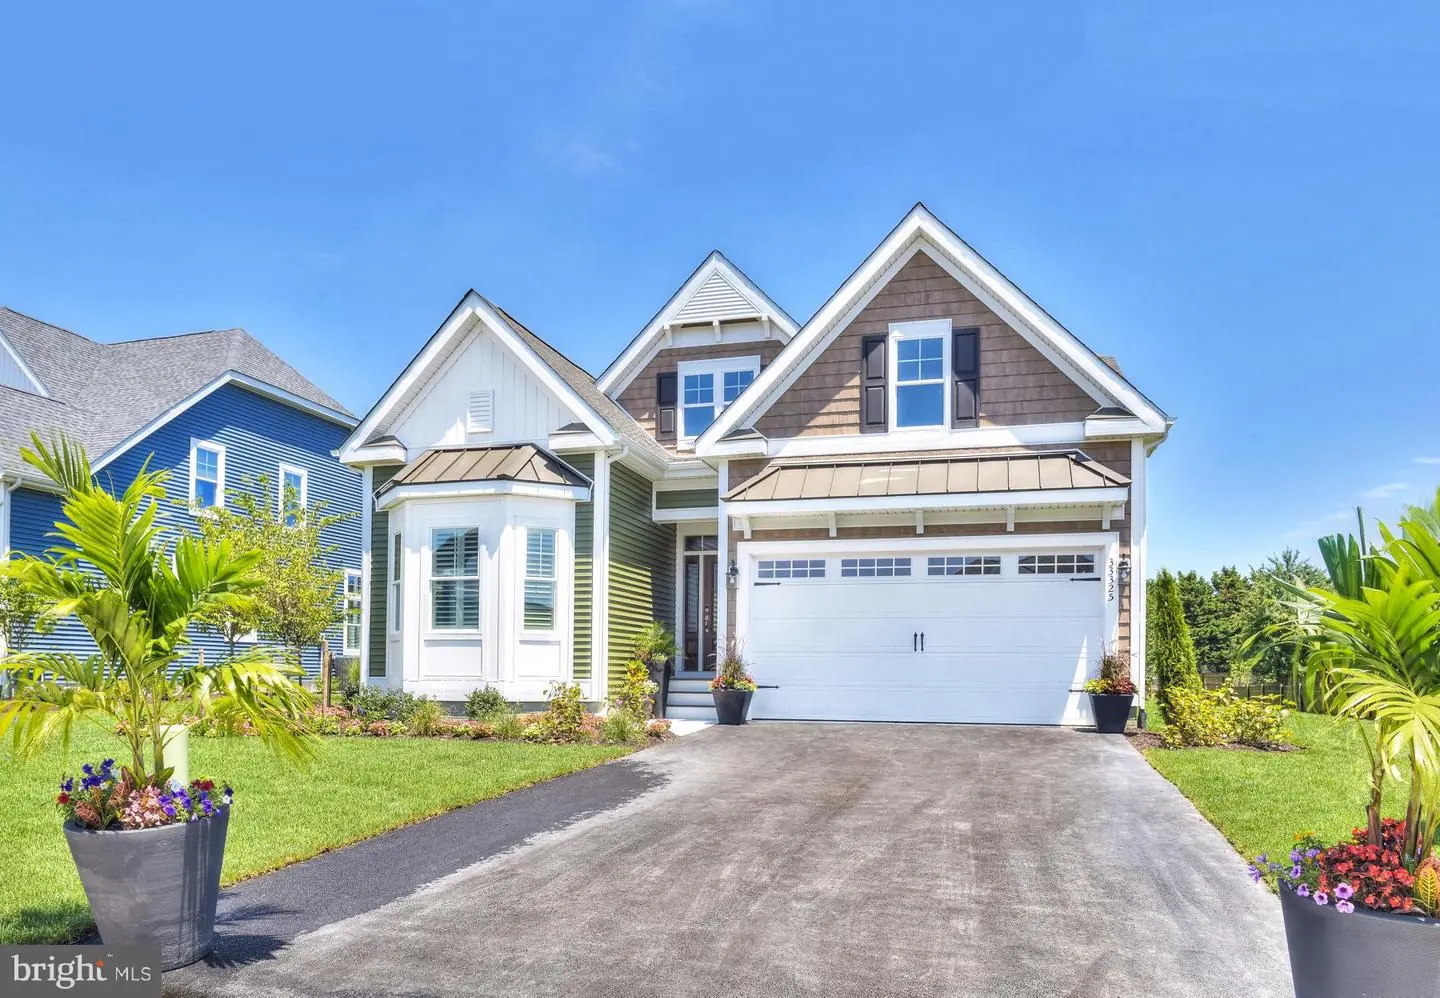 DESU2031076-801956180360-2024-01-30-16-56-08 Bluebell To-be-built Home Tbd | Millsboro, DE Real Estate For Sale | MLS# Desu2031076  - Ocean Atlantic